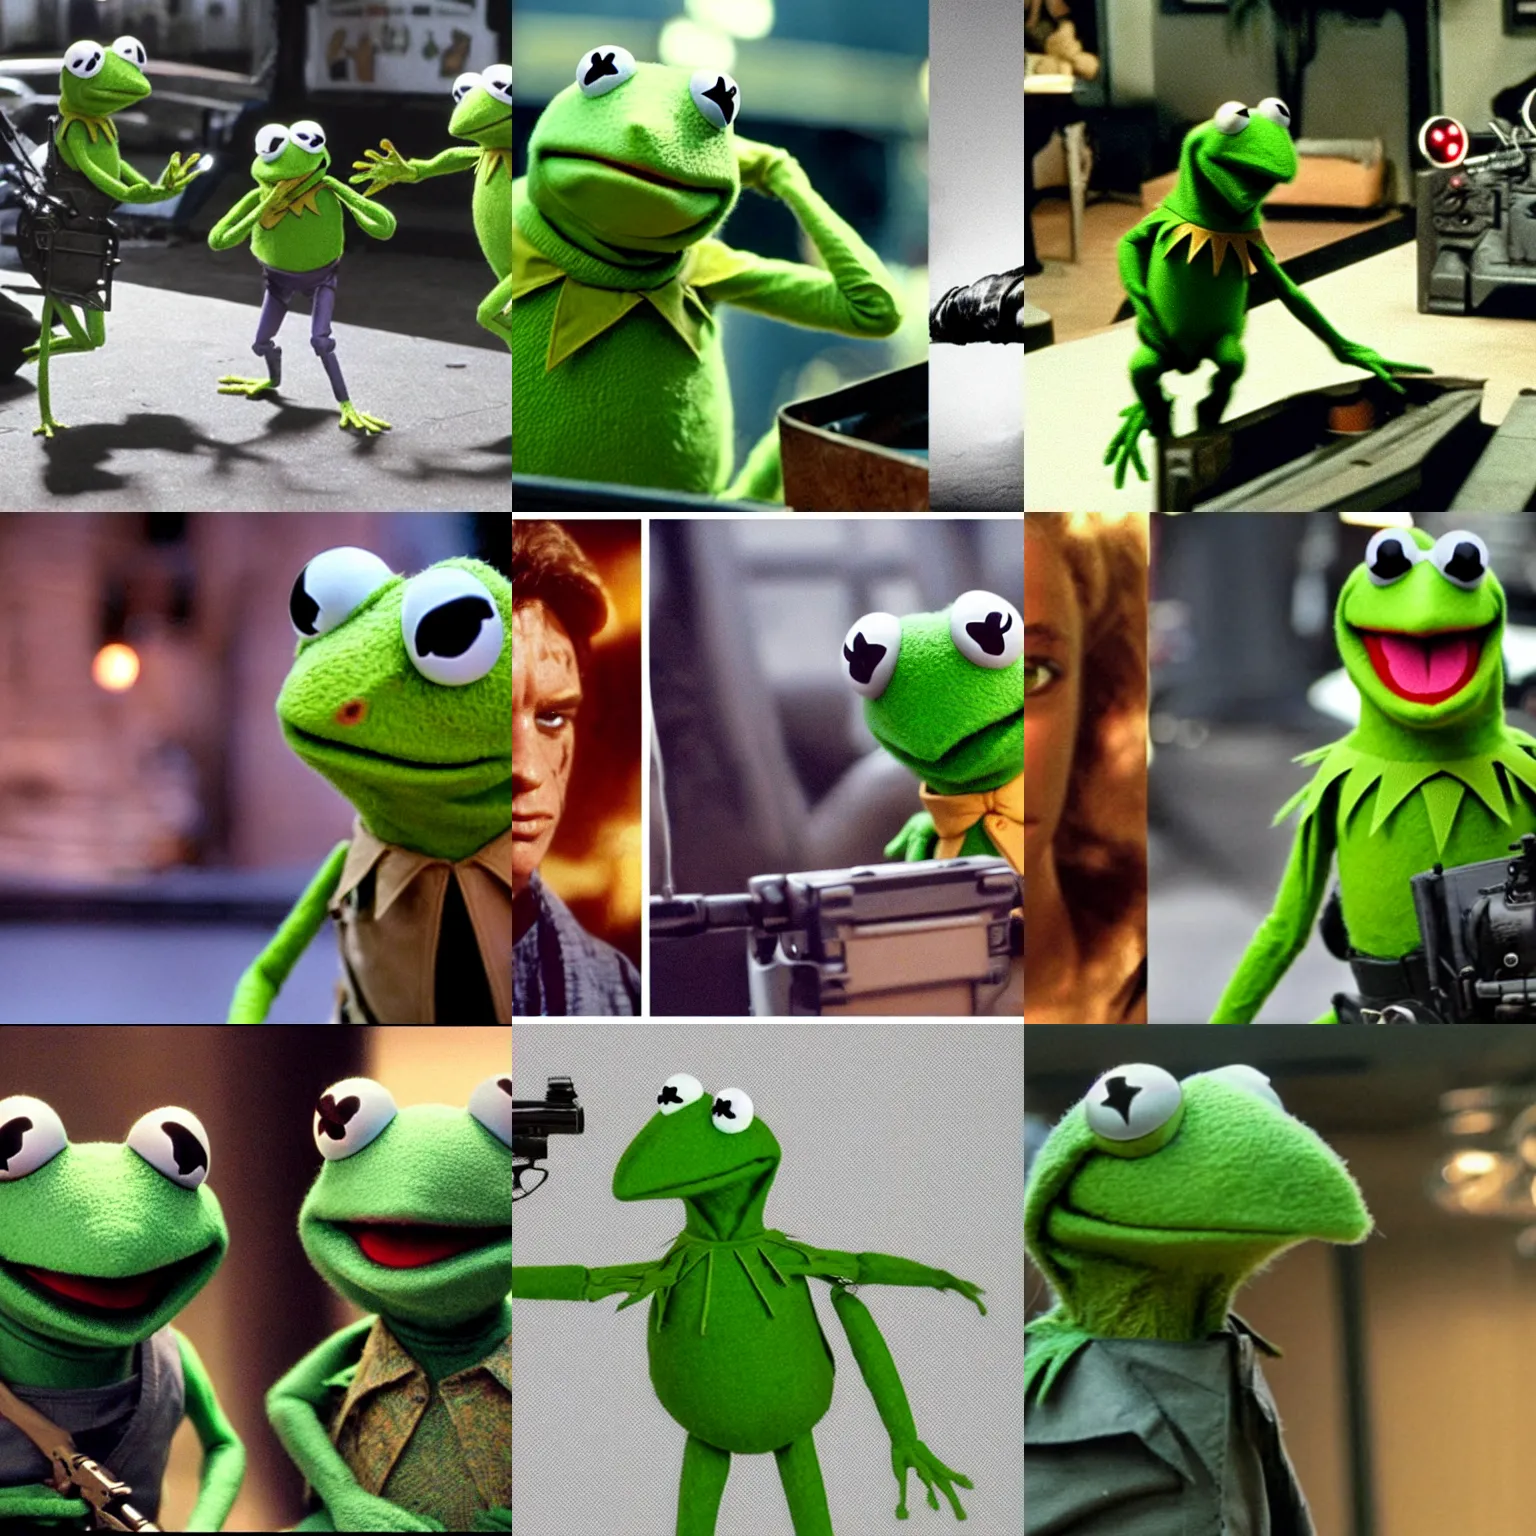 Prompt: battle of Kermit the frog versus Terminator movie, still film